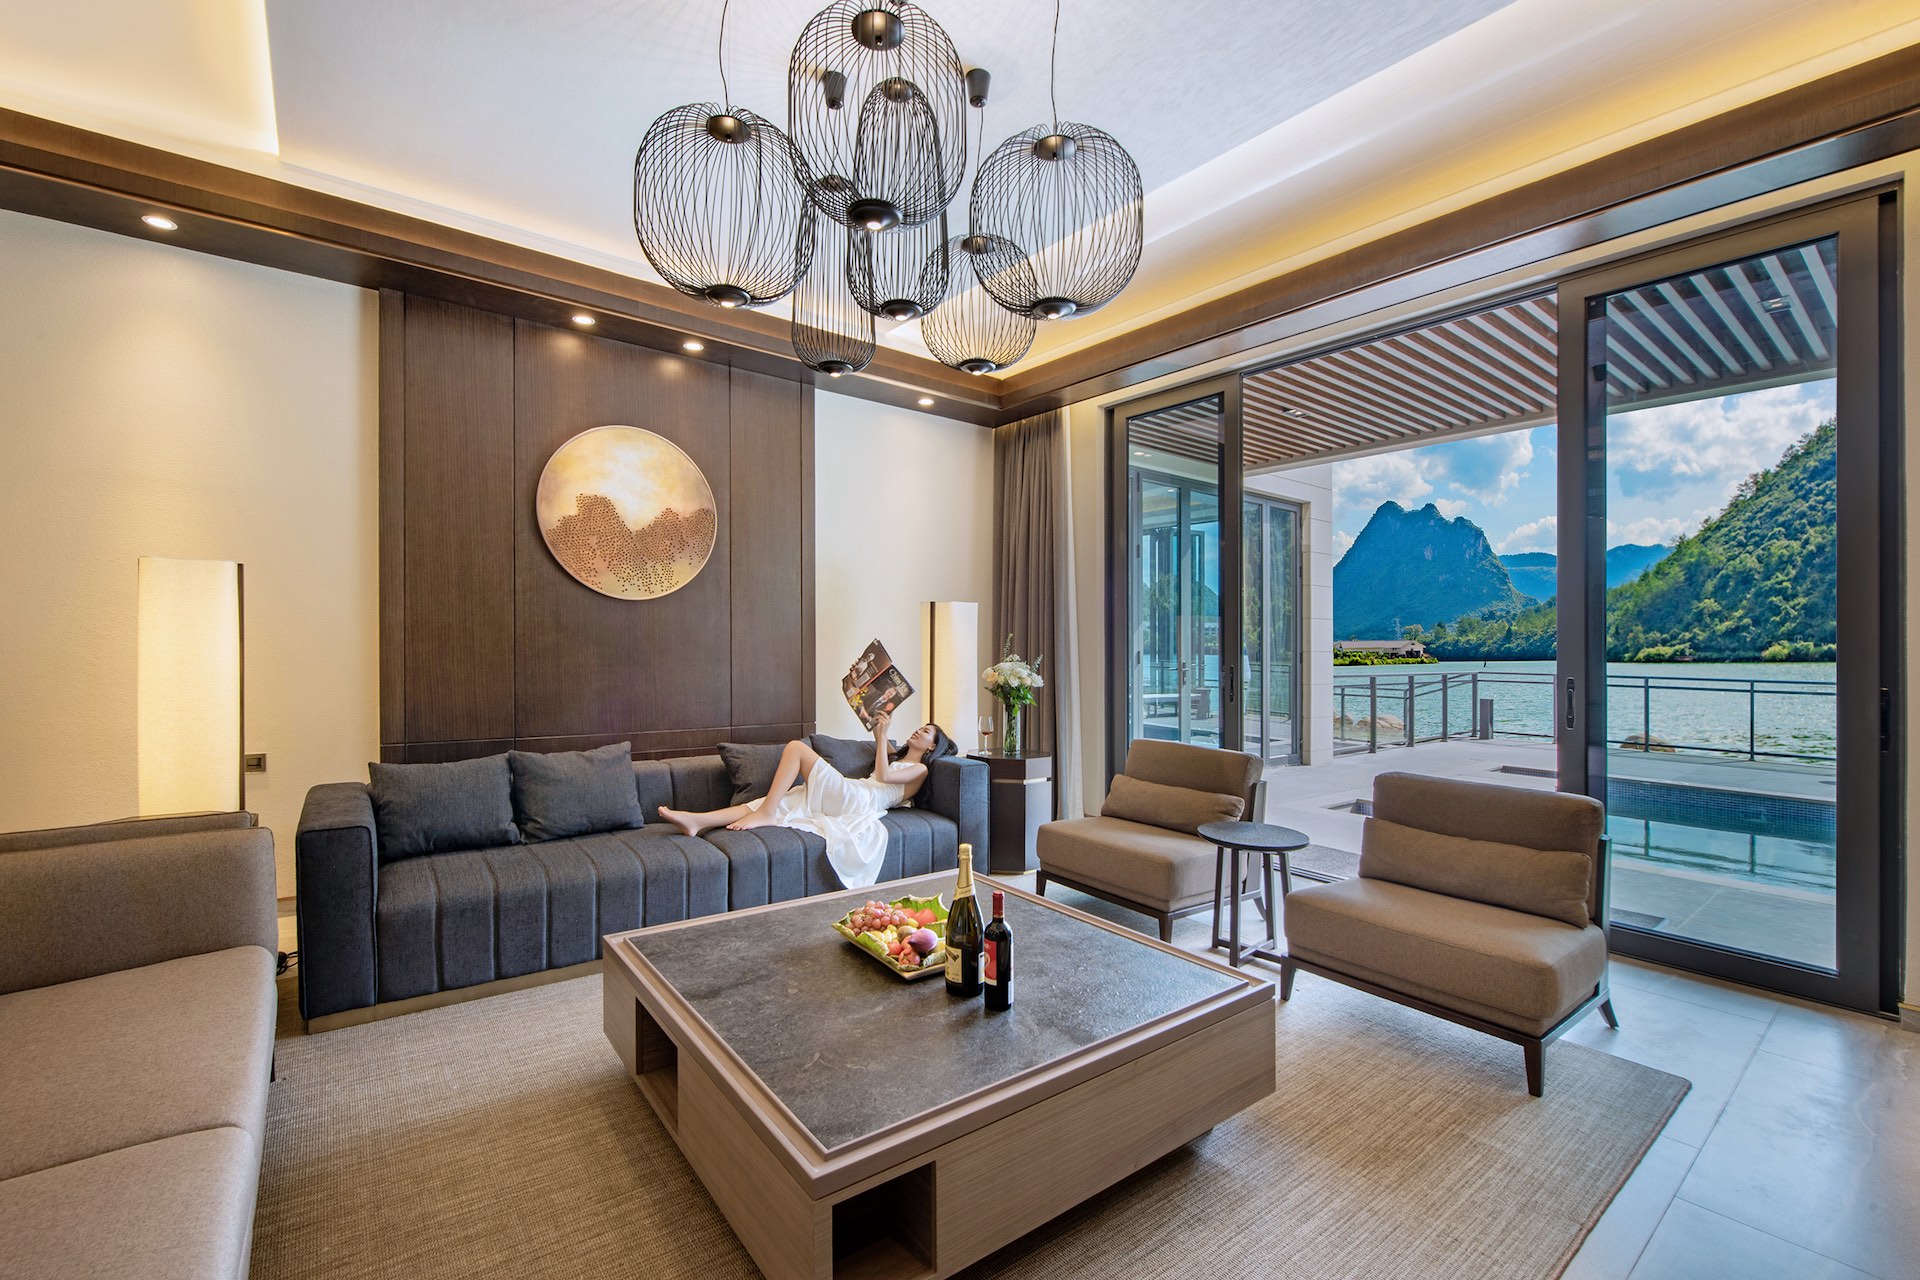 MUSE Design Winners - Lantau Lake Villa Resort